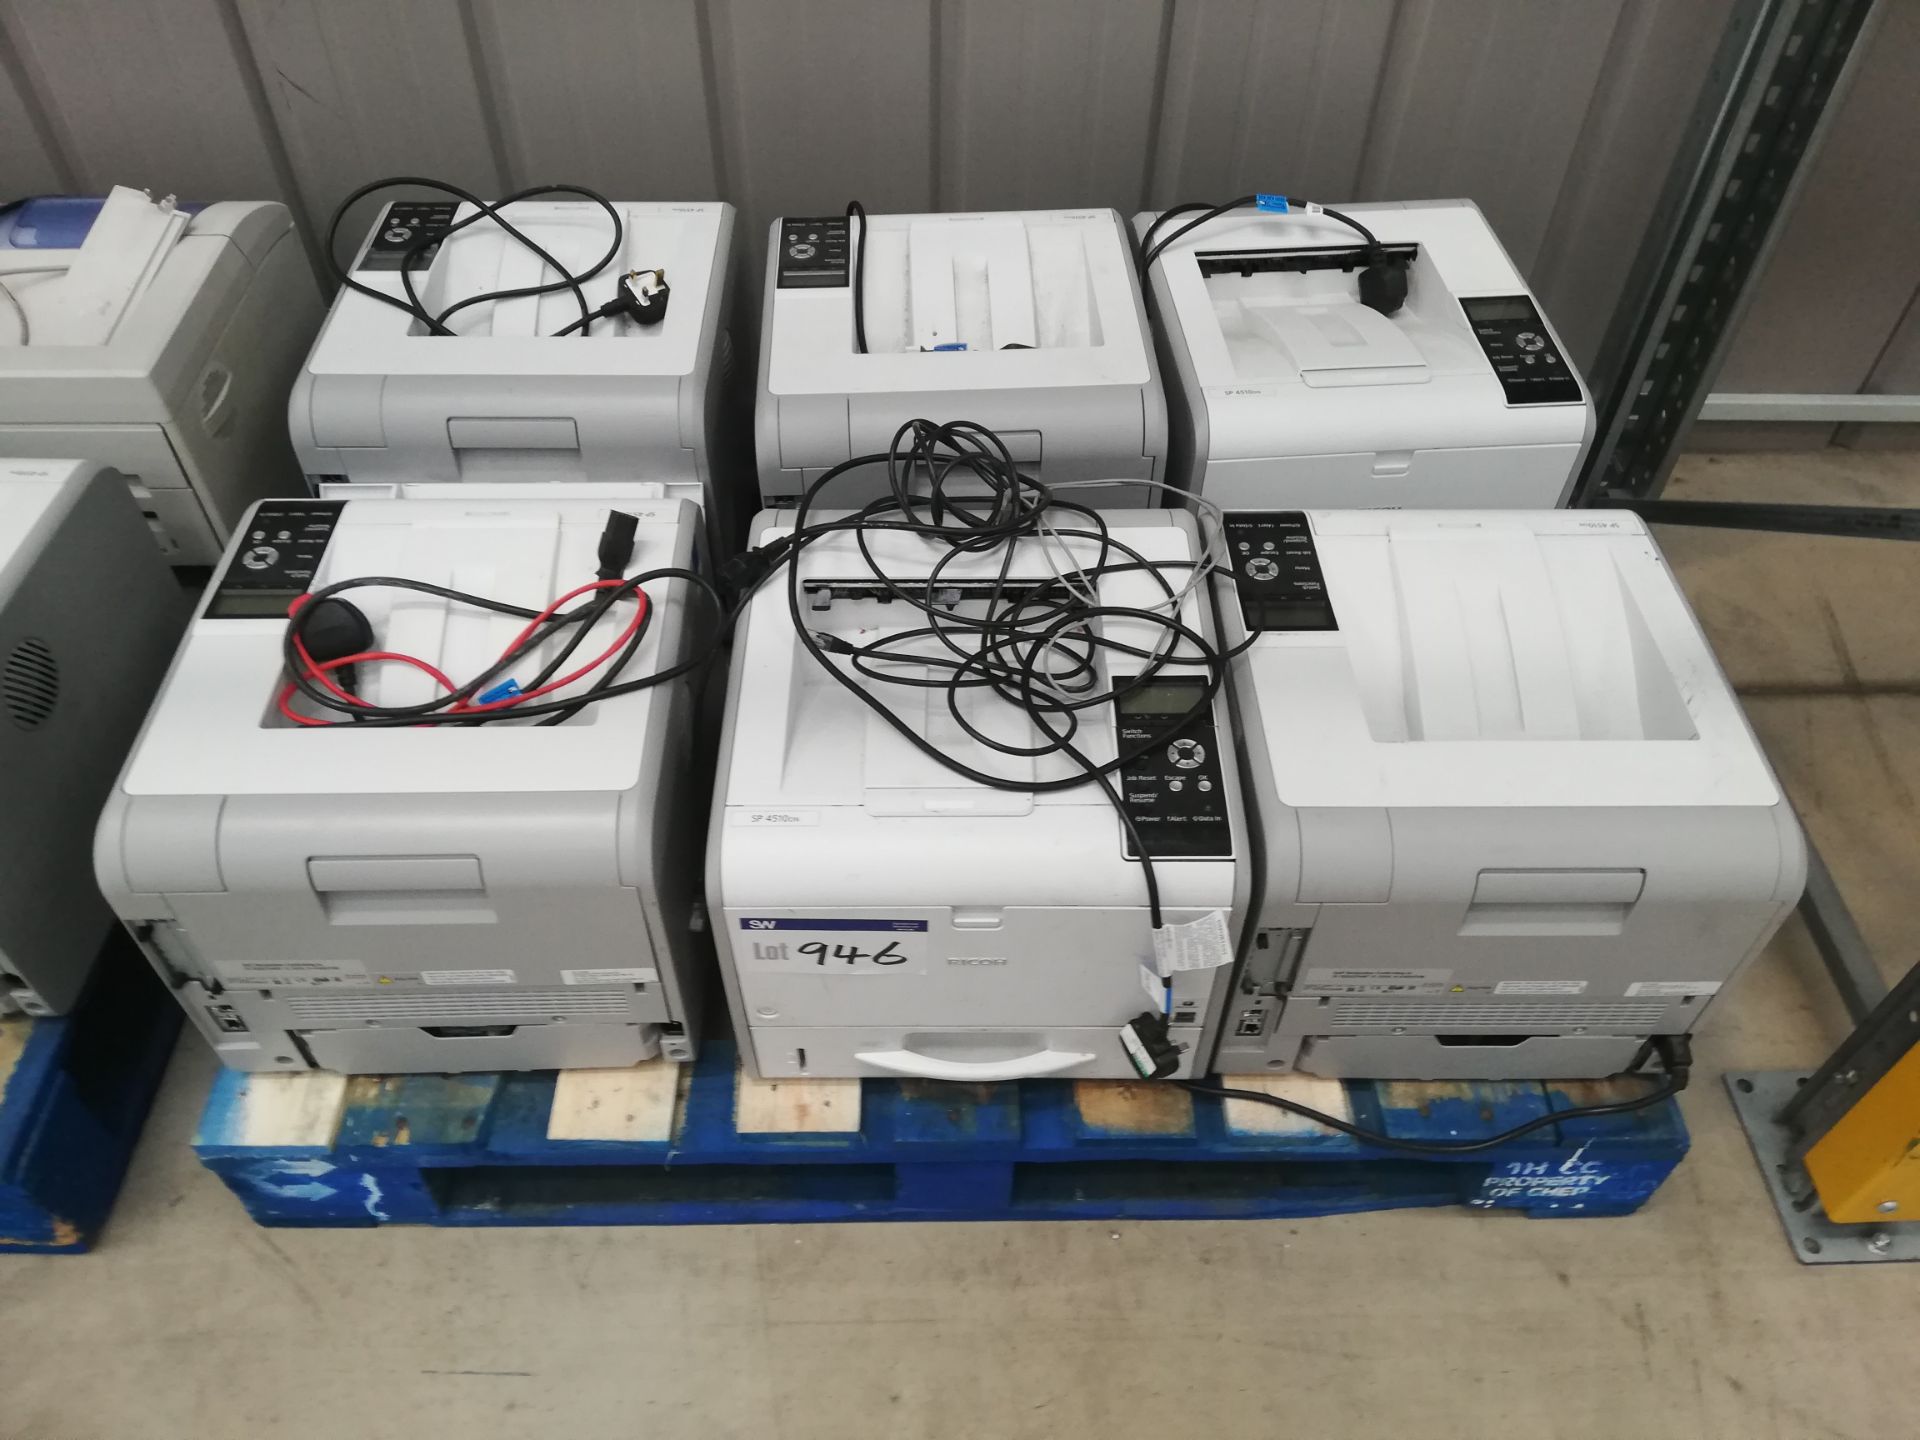 6 x Various Laser Printers